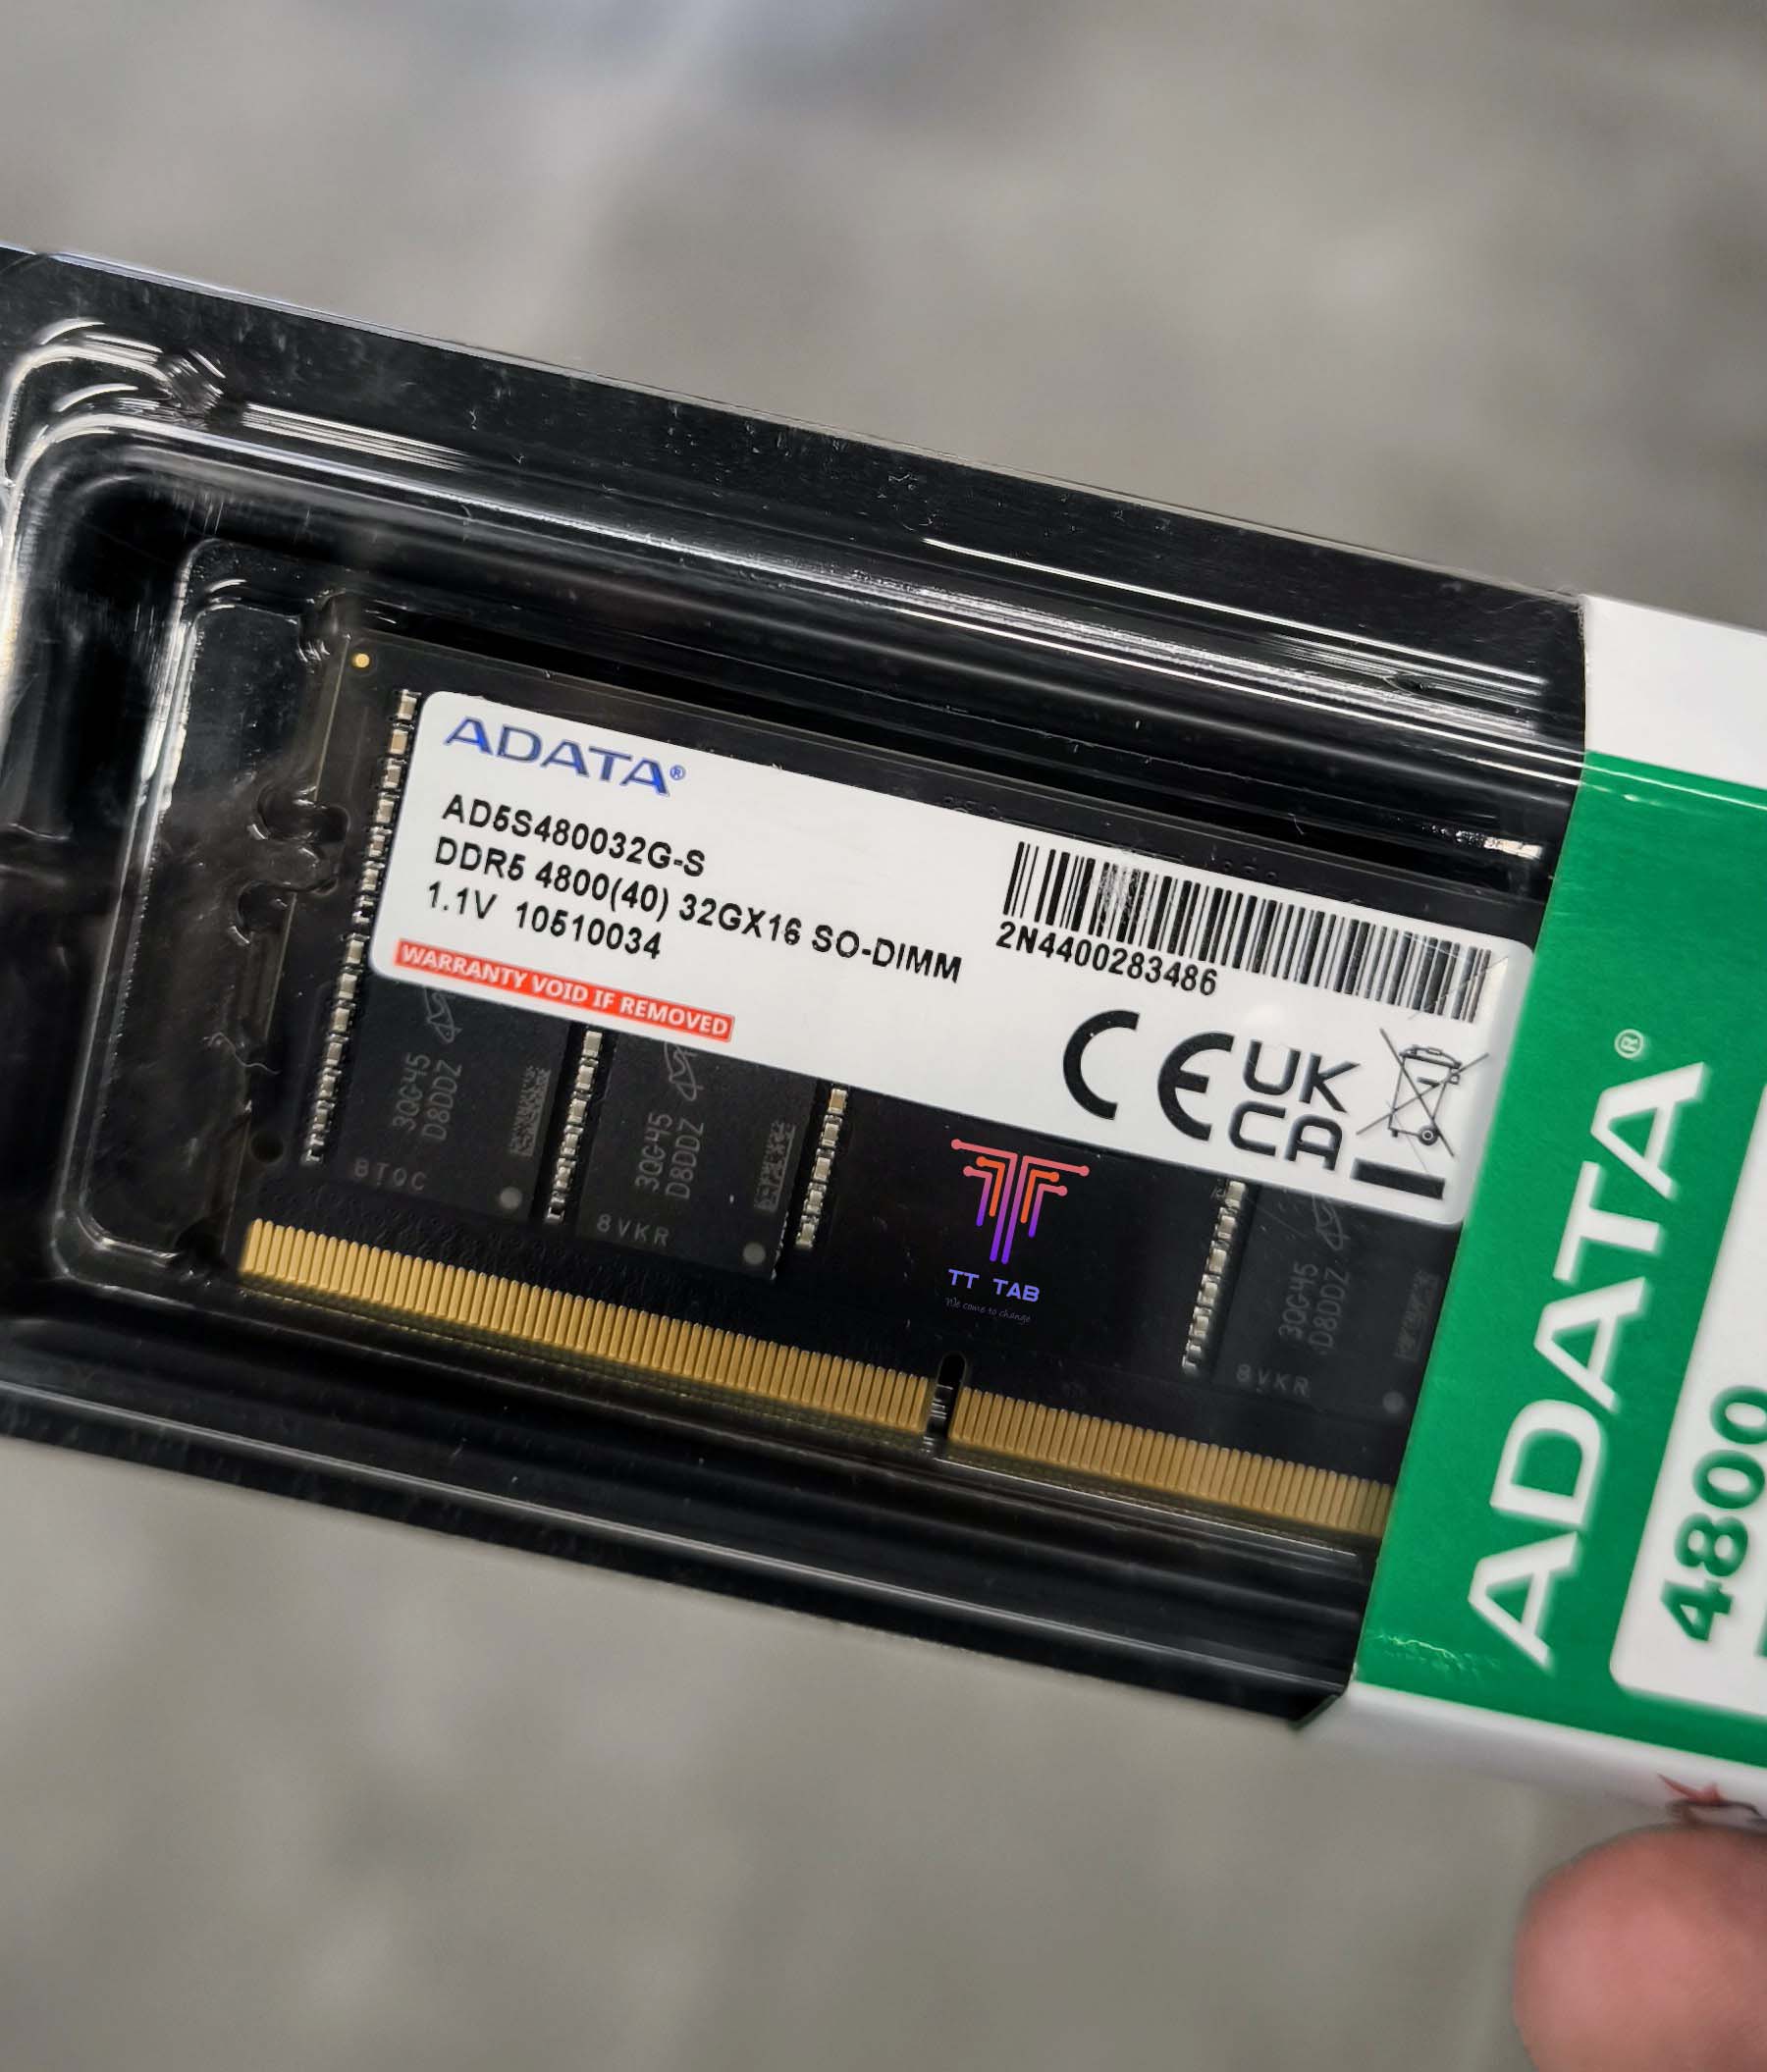 ADATA RAM Laptop DDR5 5600MHz